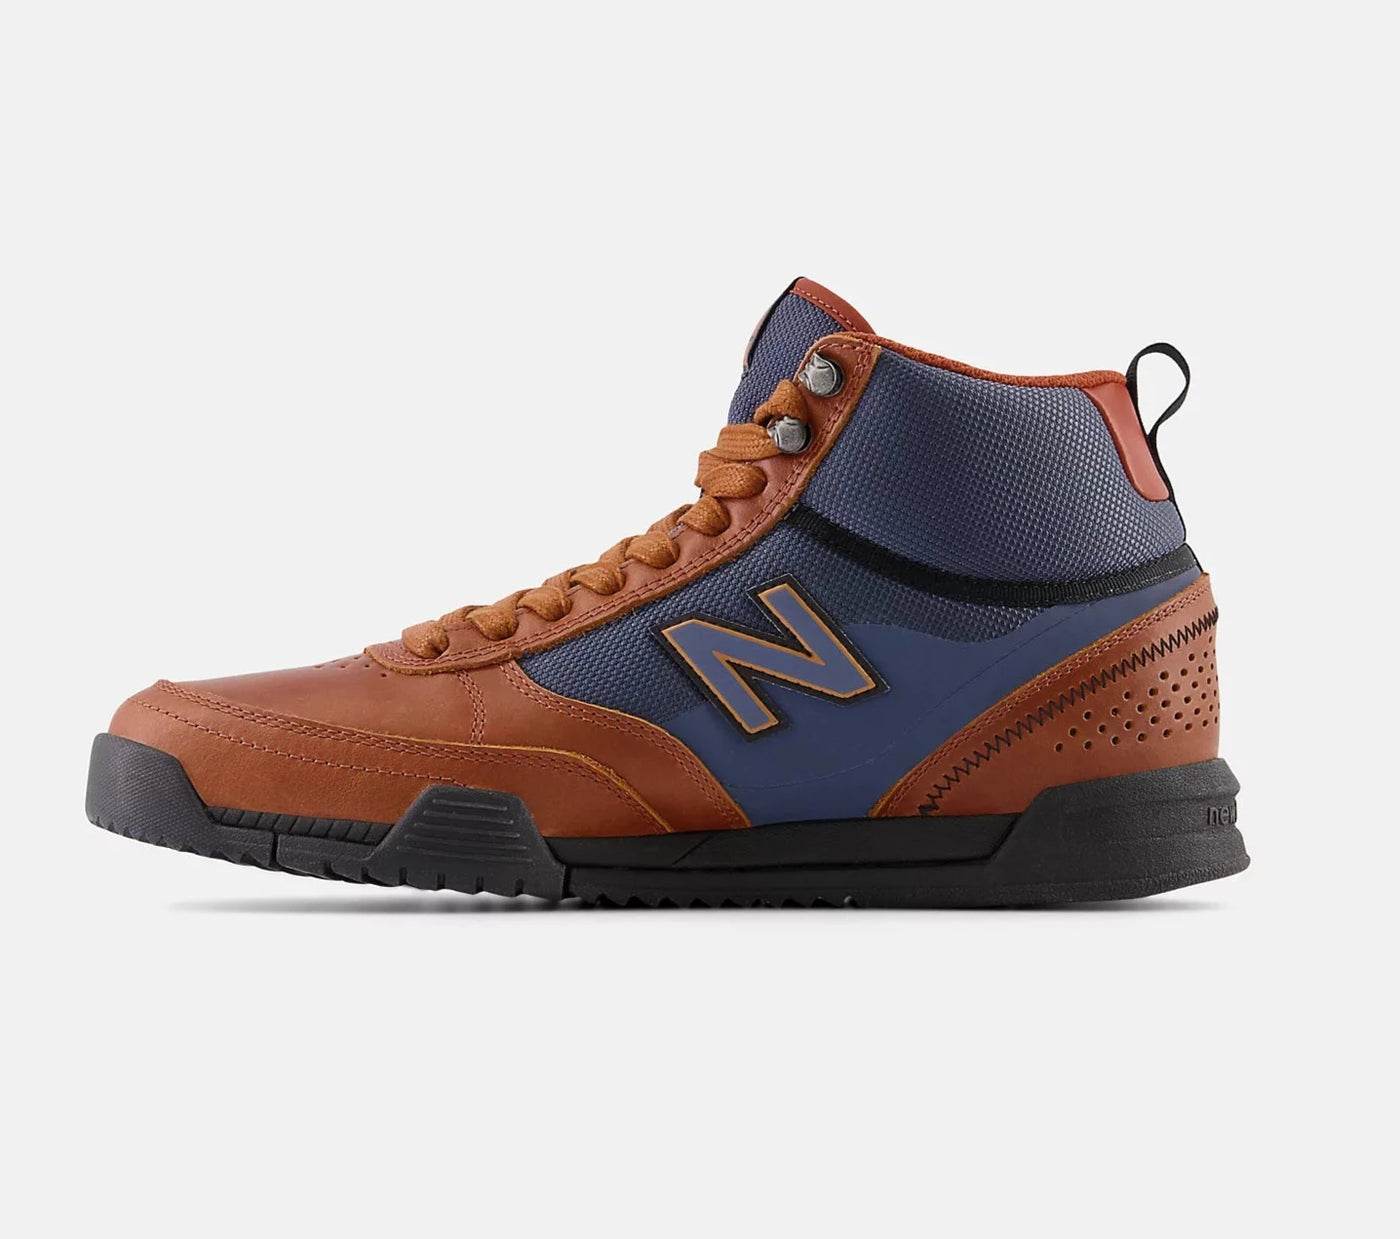 New Balance Numeric 440 Trail Shoe, Brown